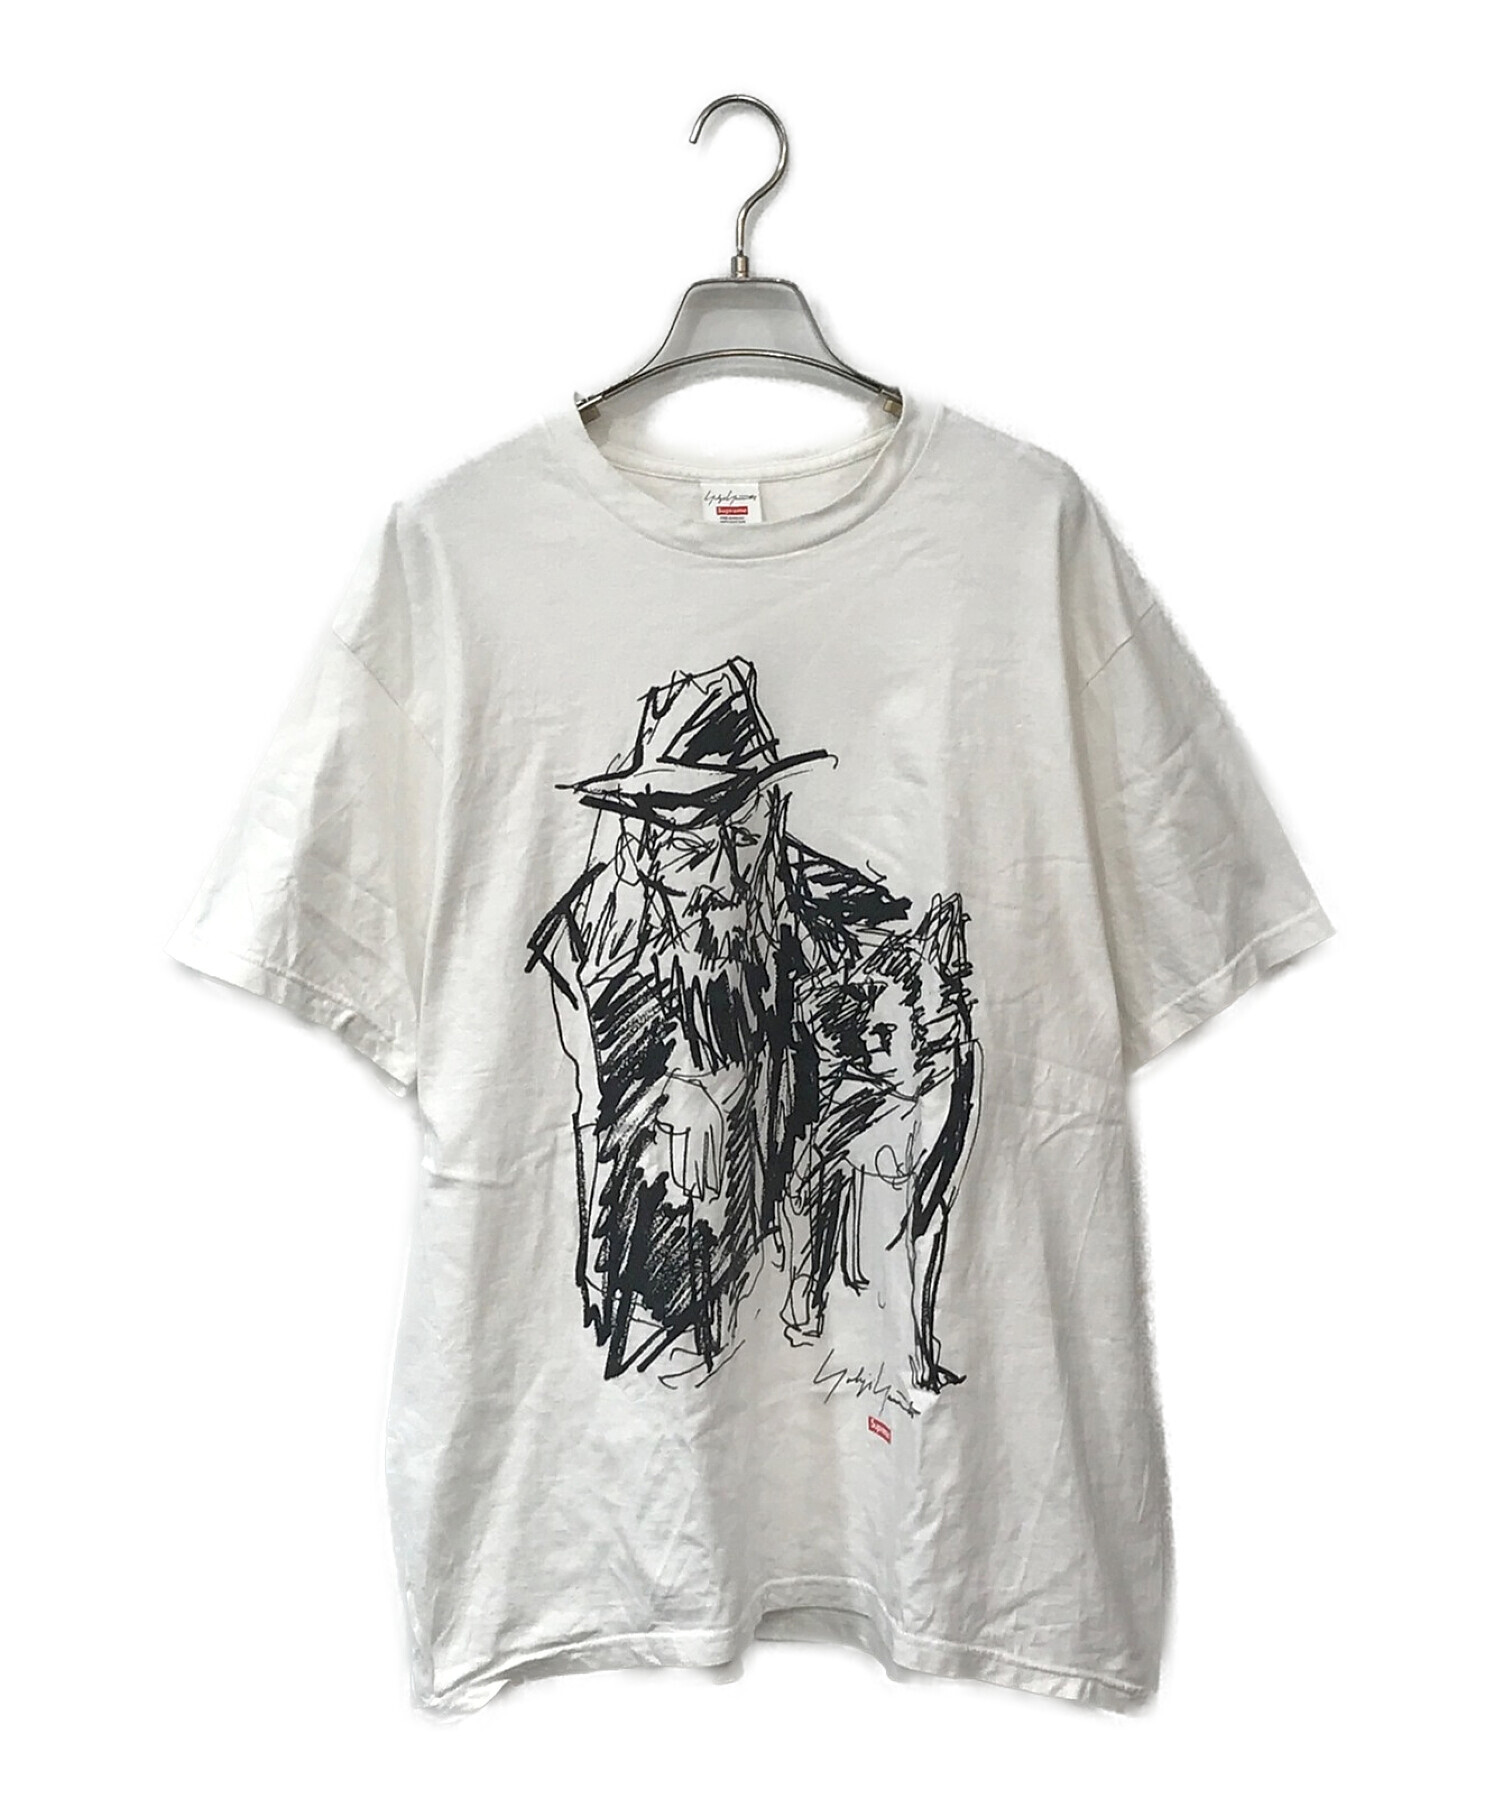 Supreme Yohji Yamamoto Shirt white Lサイズ